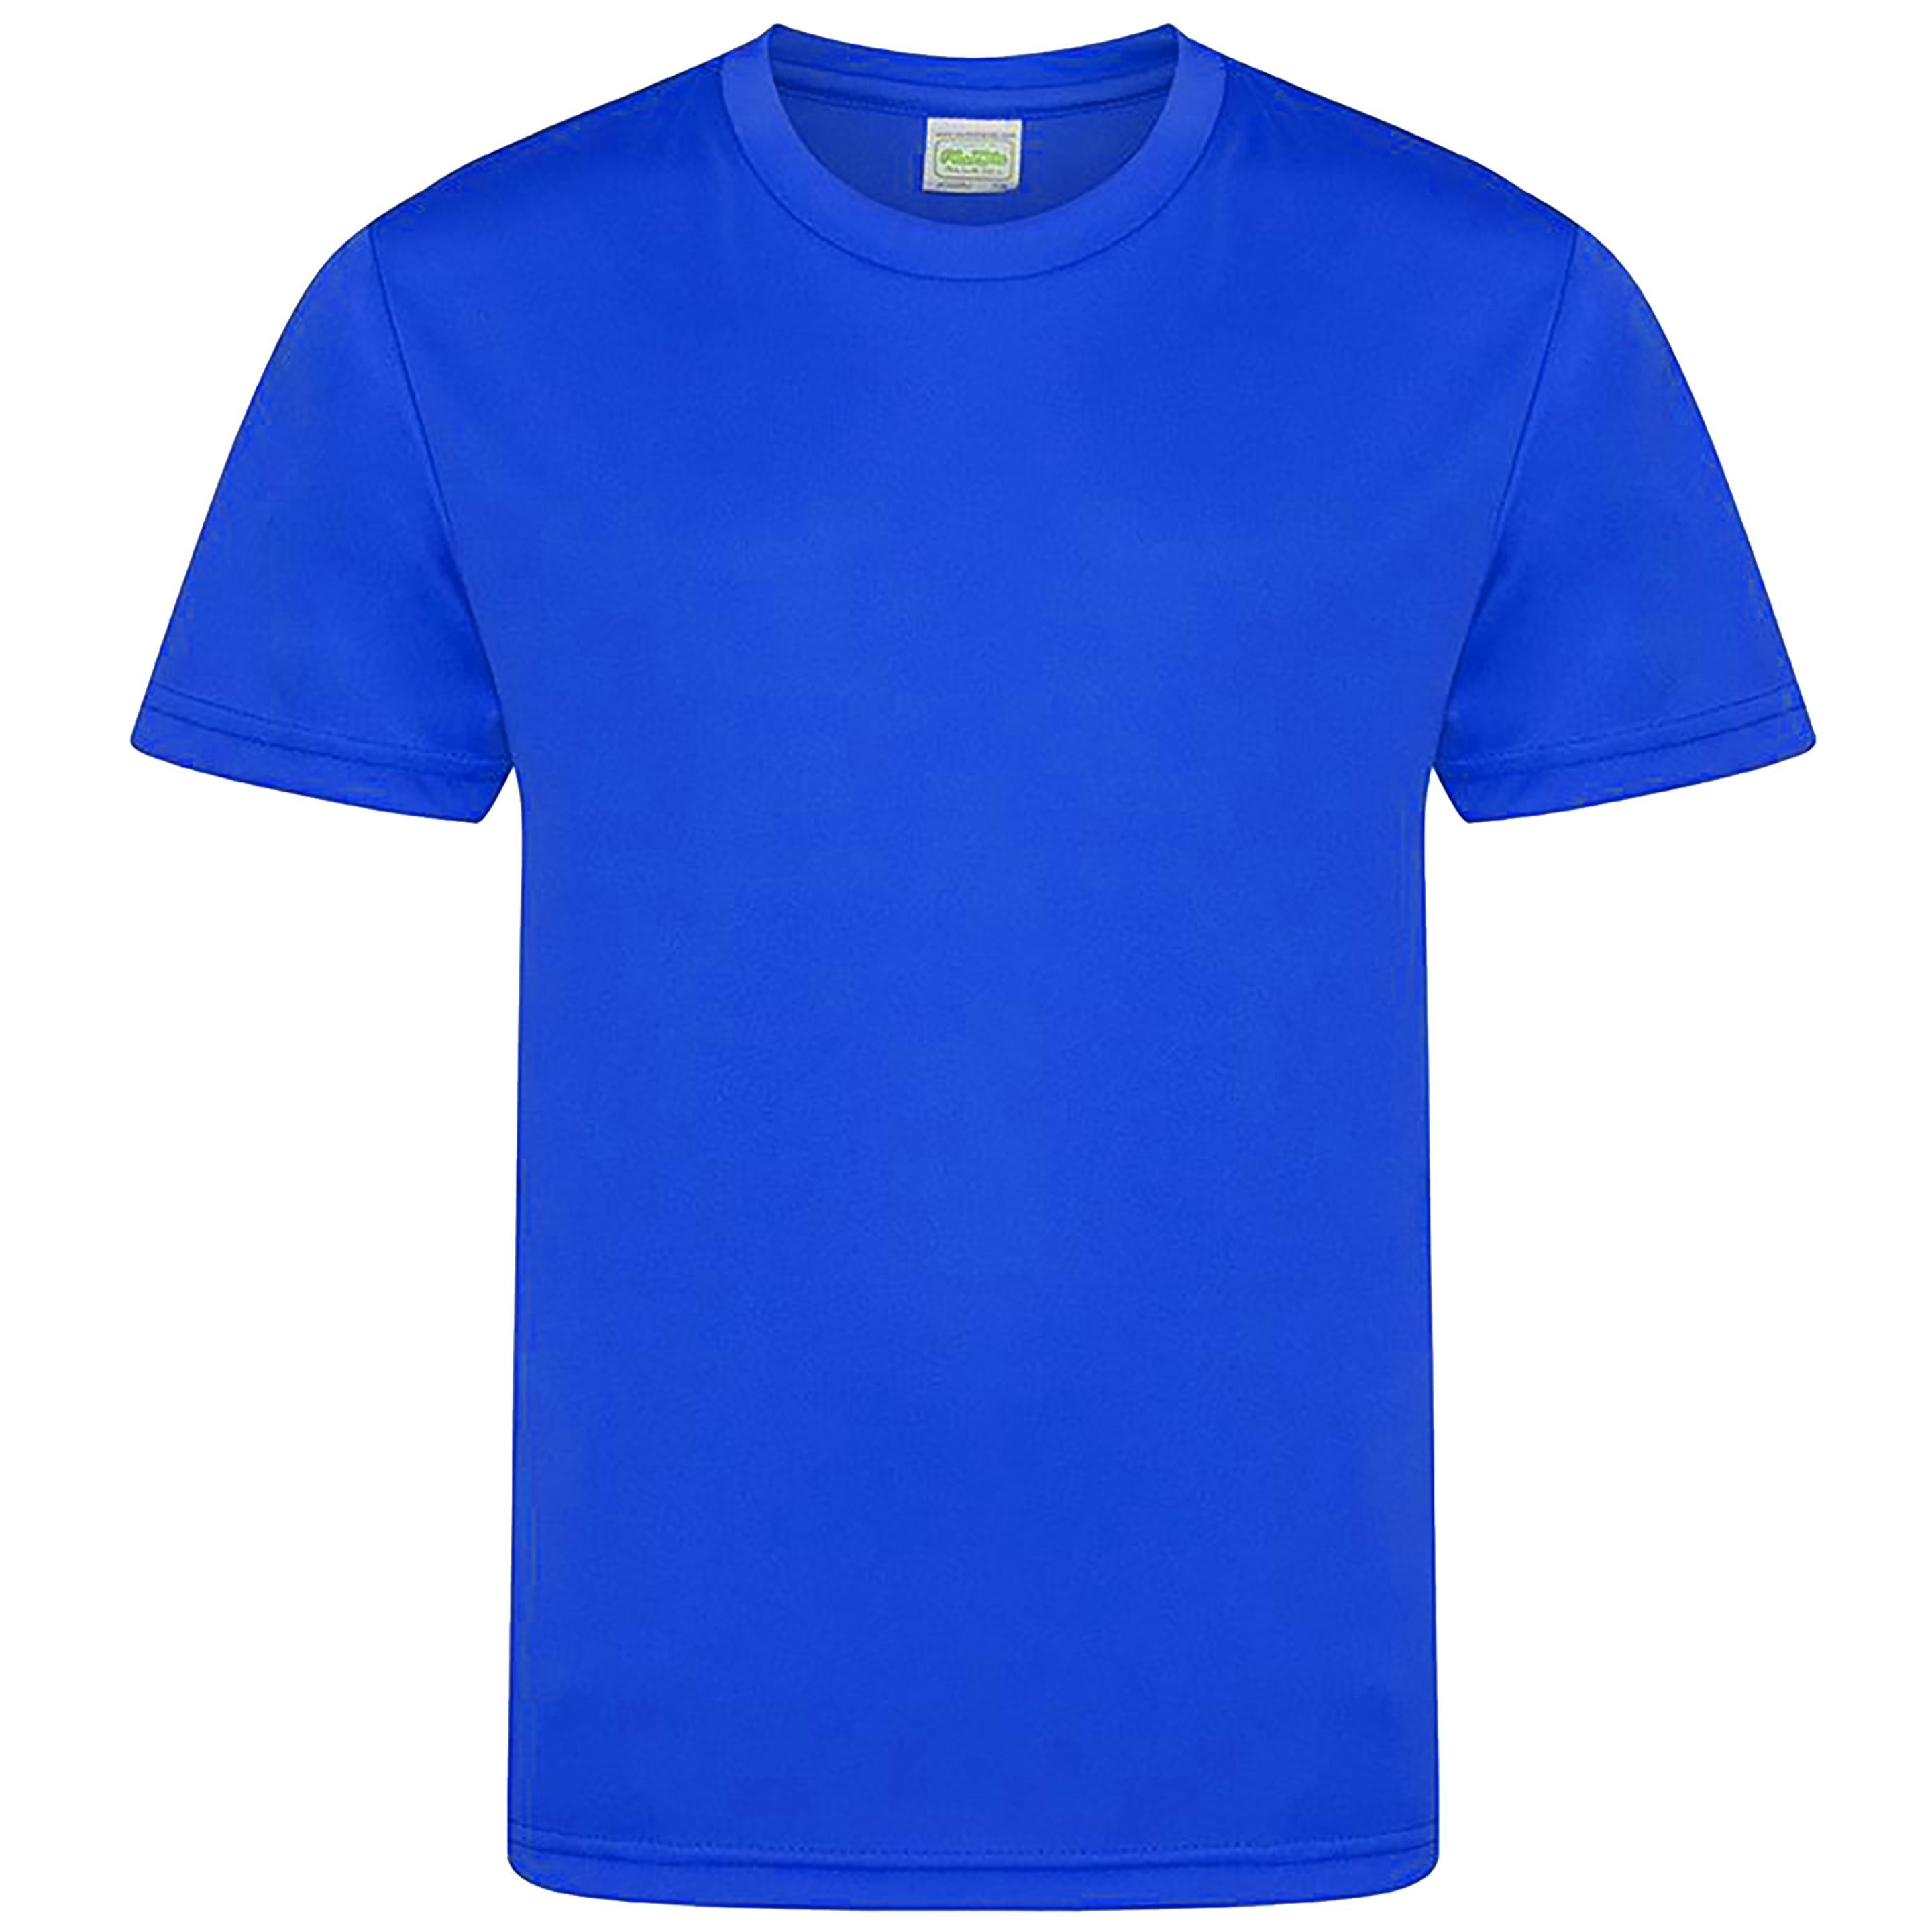 Camiseta Awdis Cool - azul - 